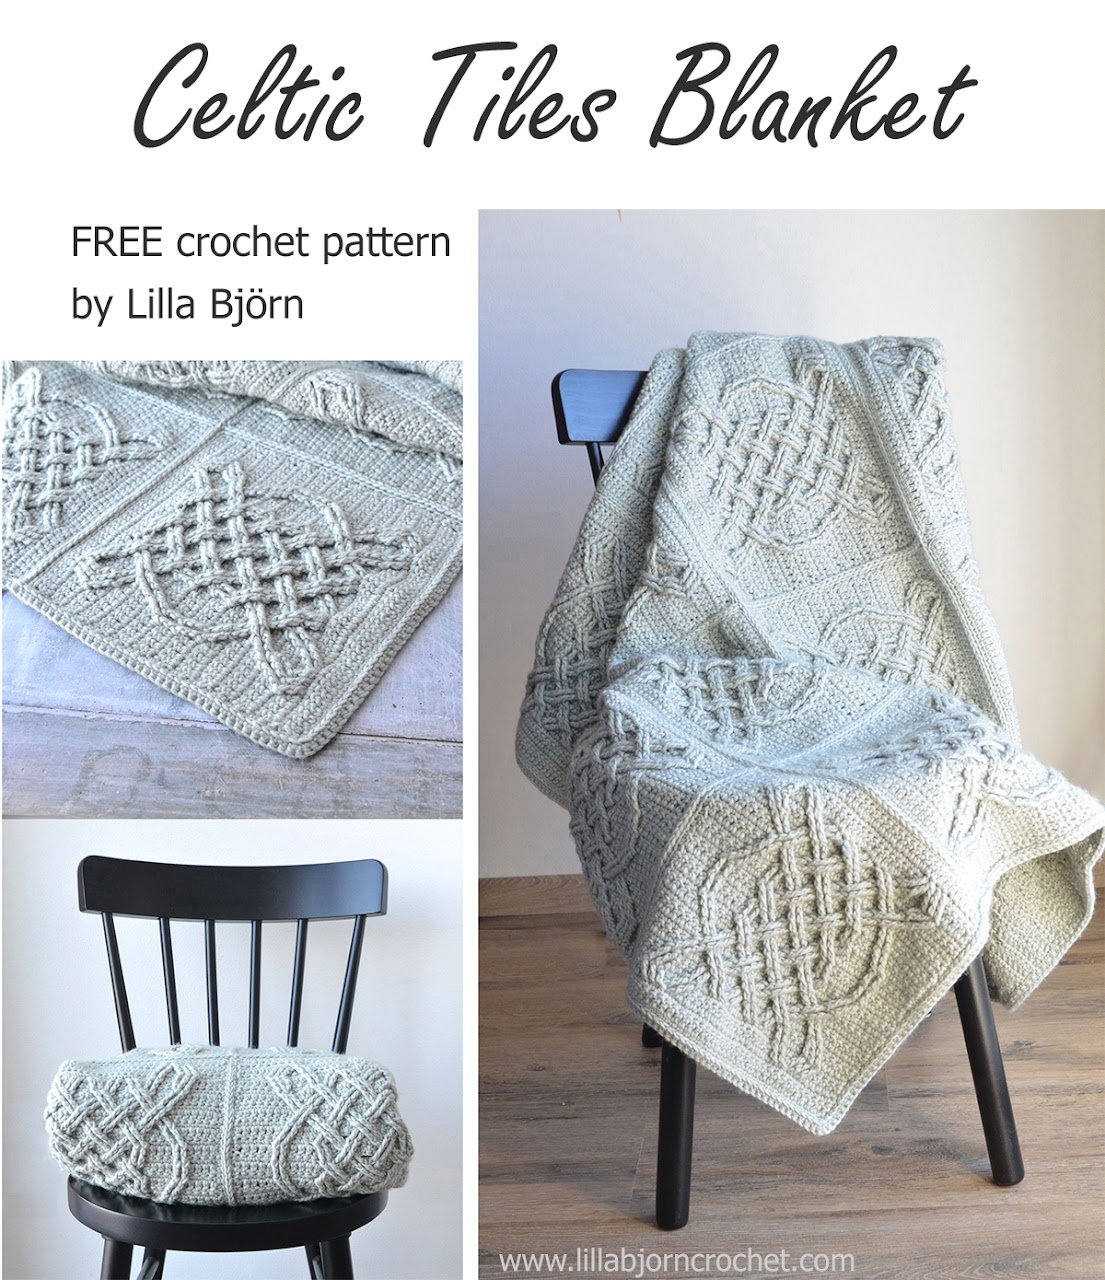 Celtic Tiles Blanket - FREE overlay crochet pattern by Lilla Bjorn